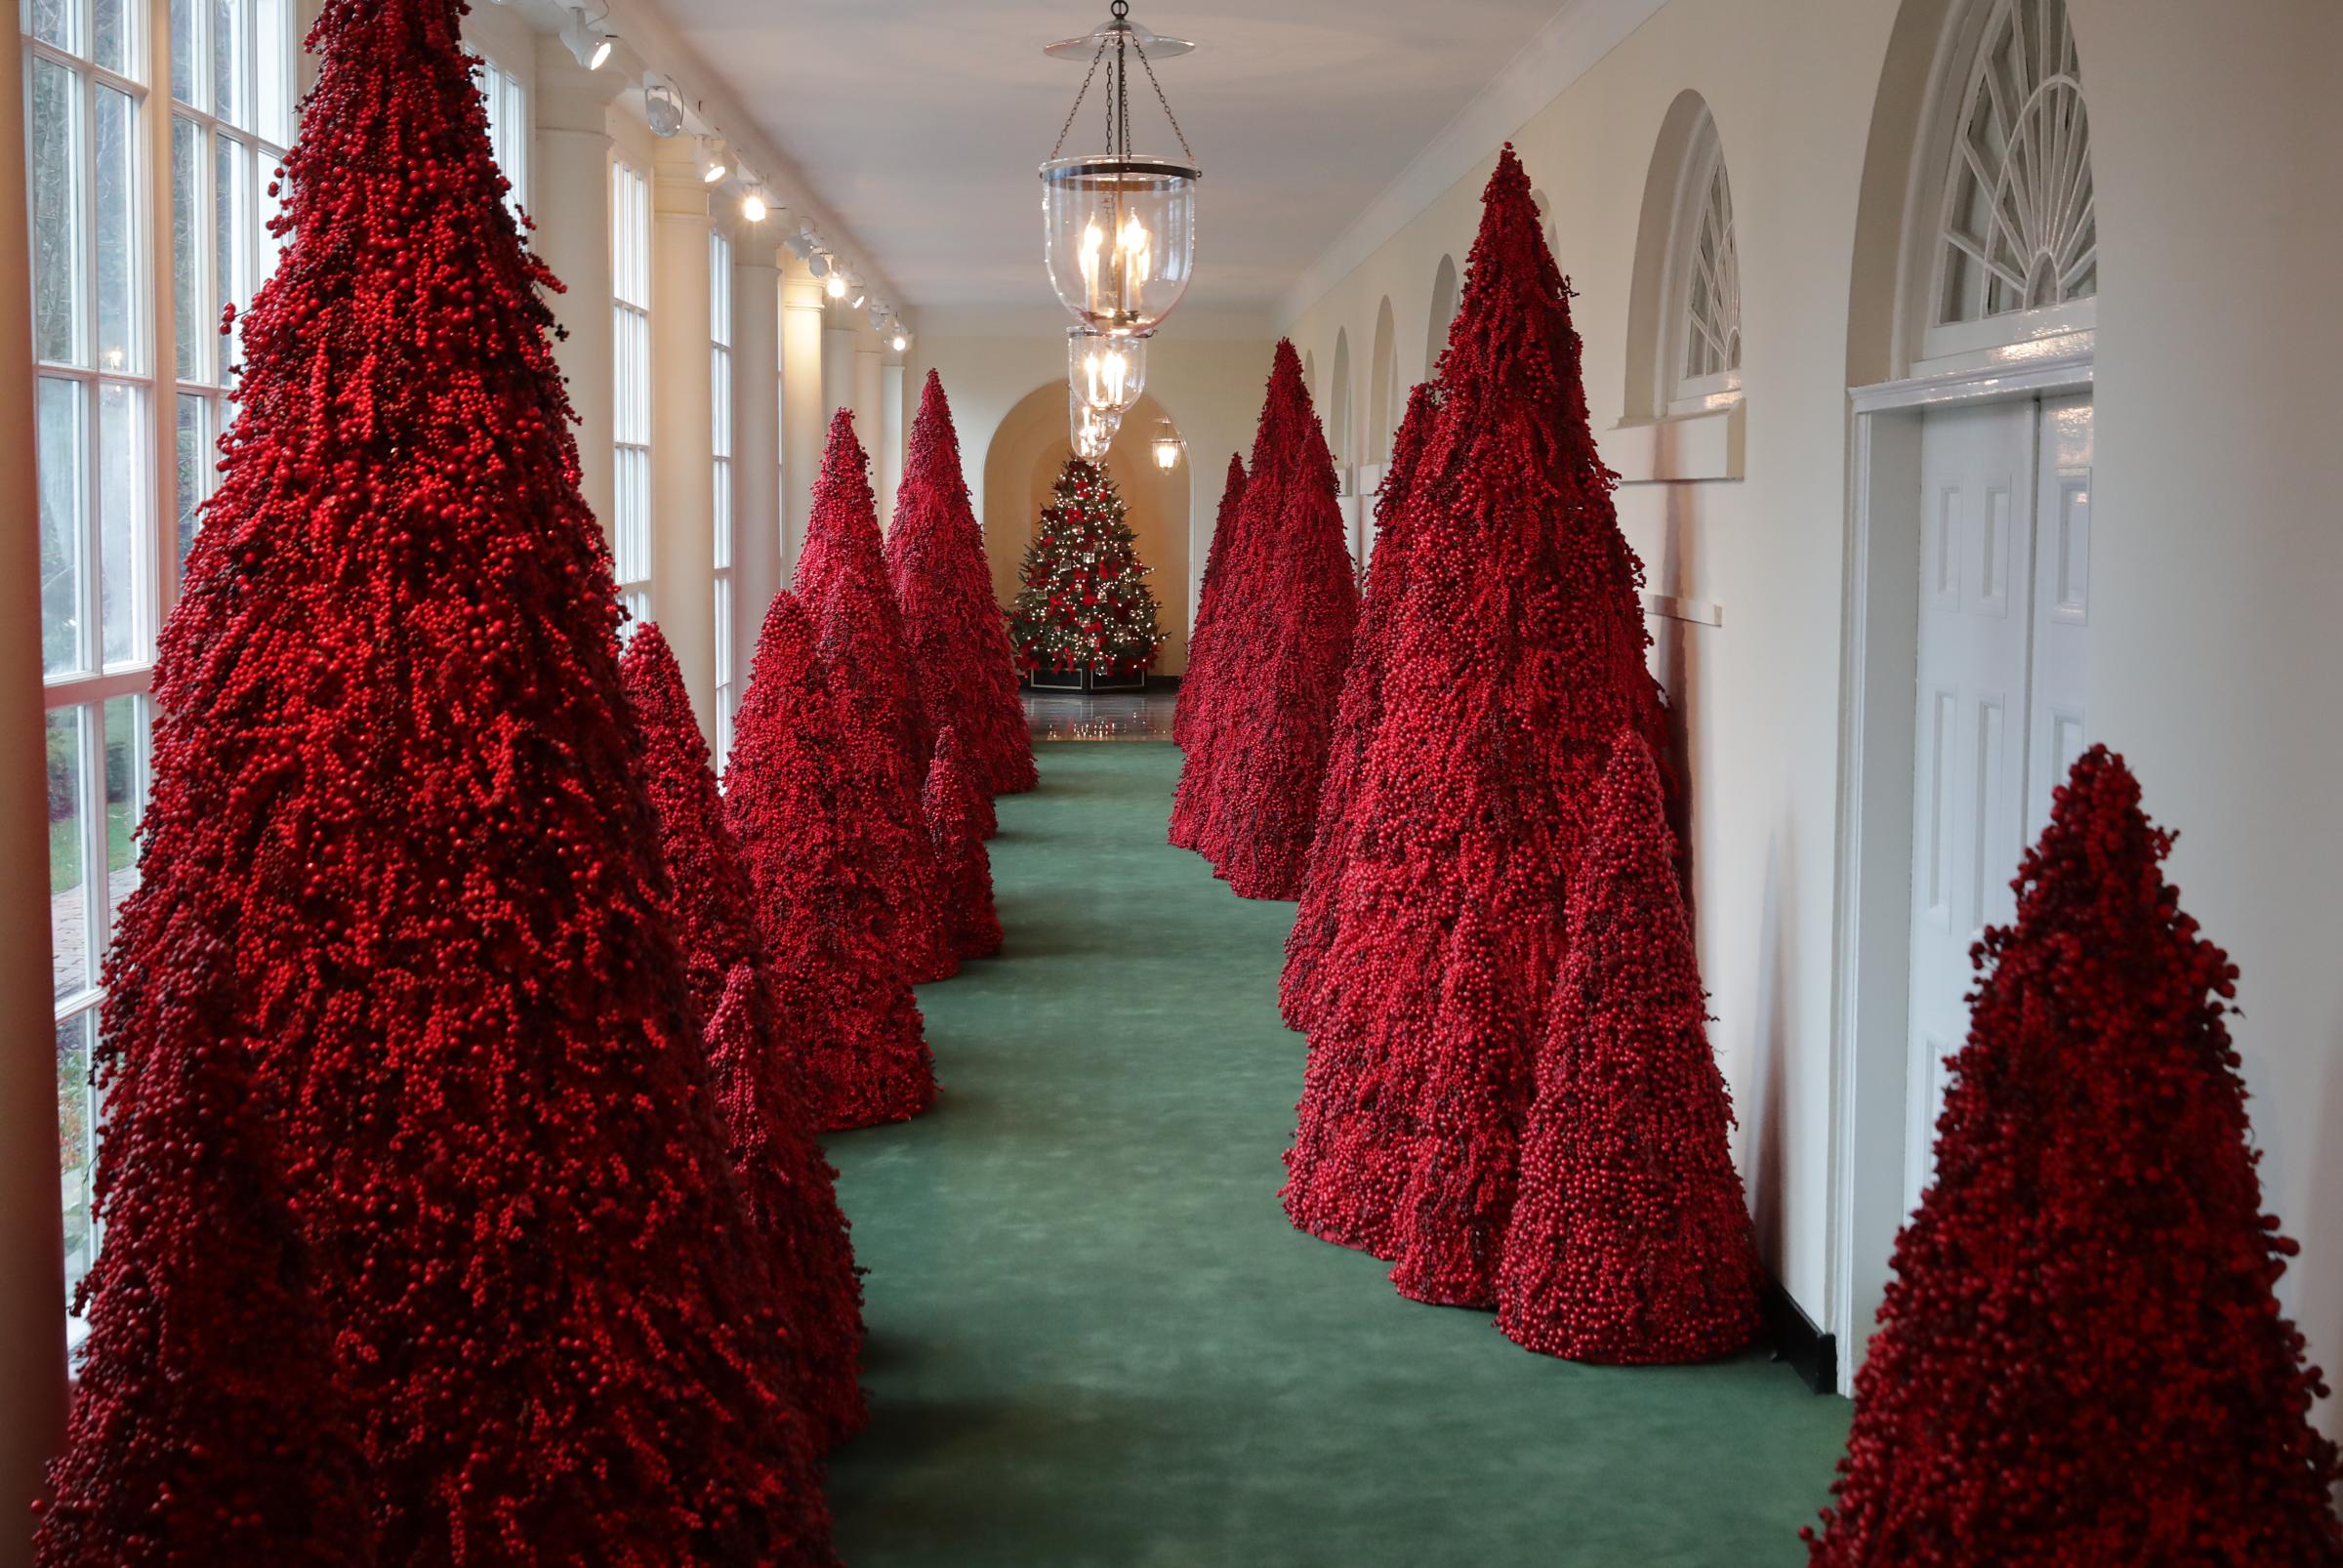 Melania Trump on the Christmas decorations